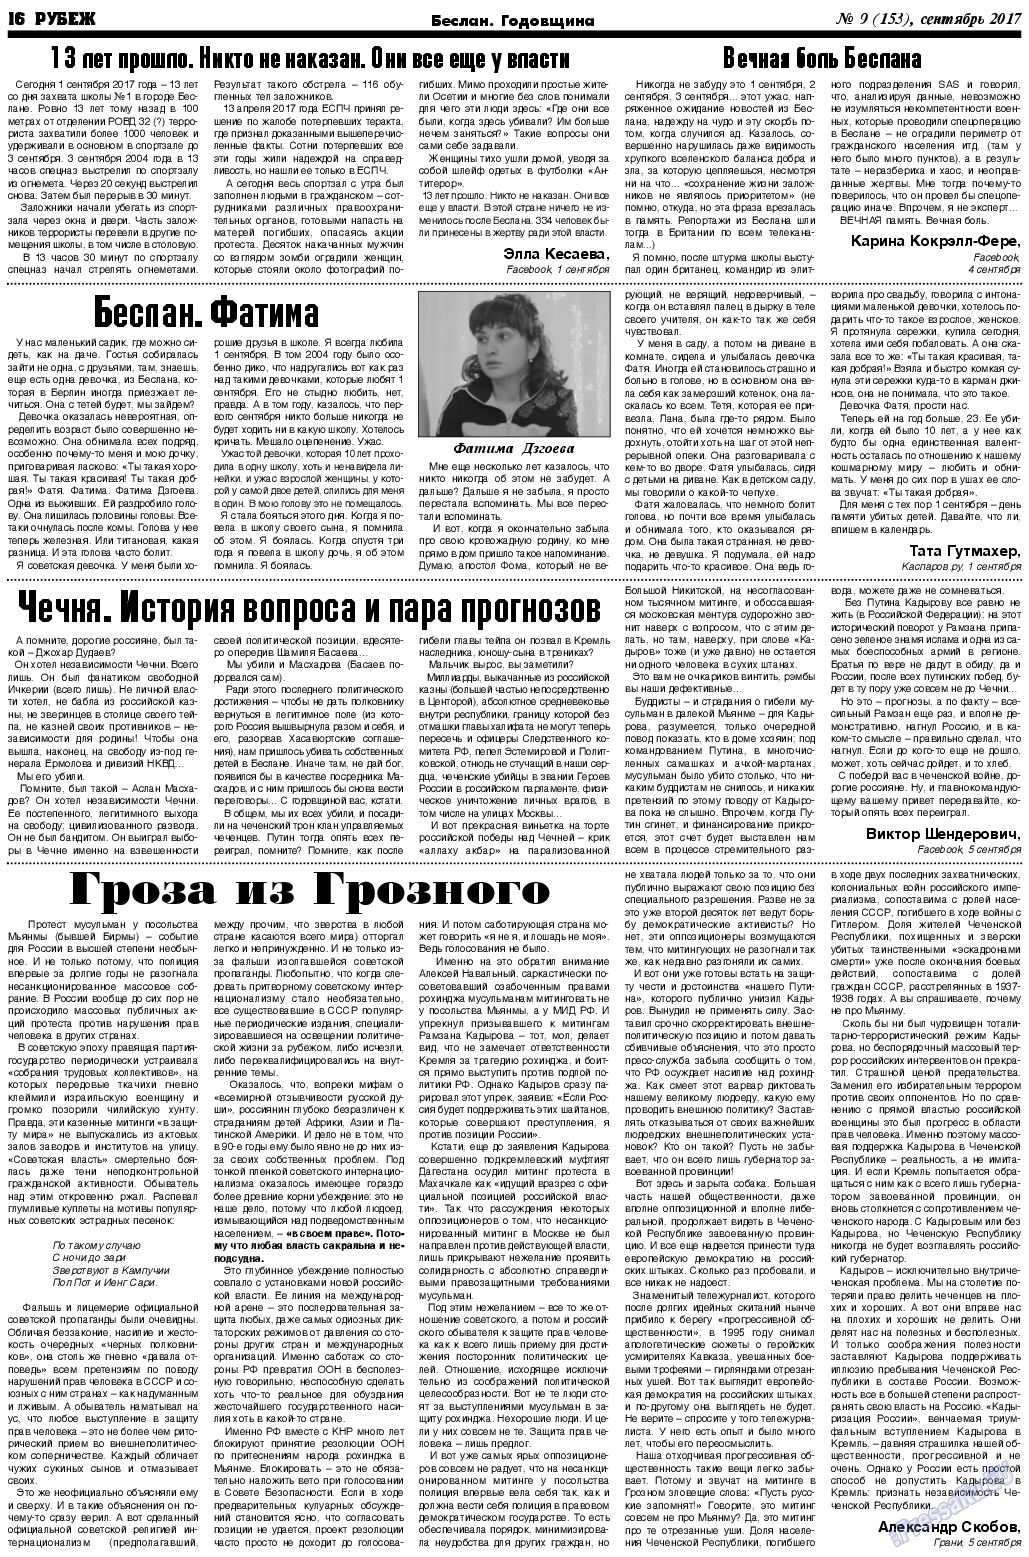 Рубеж, газета. 2017 №9 стр.16